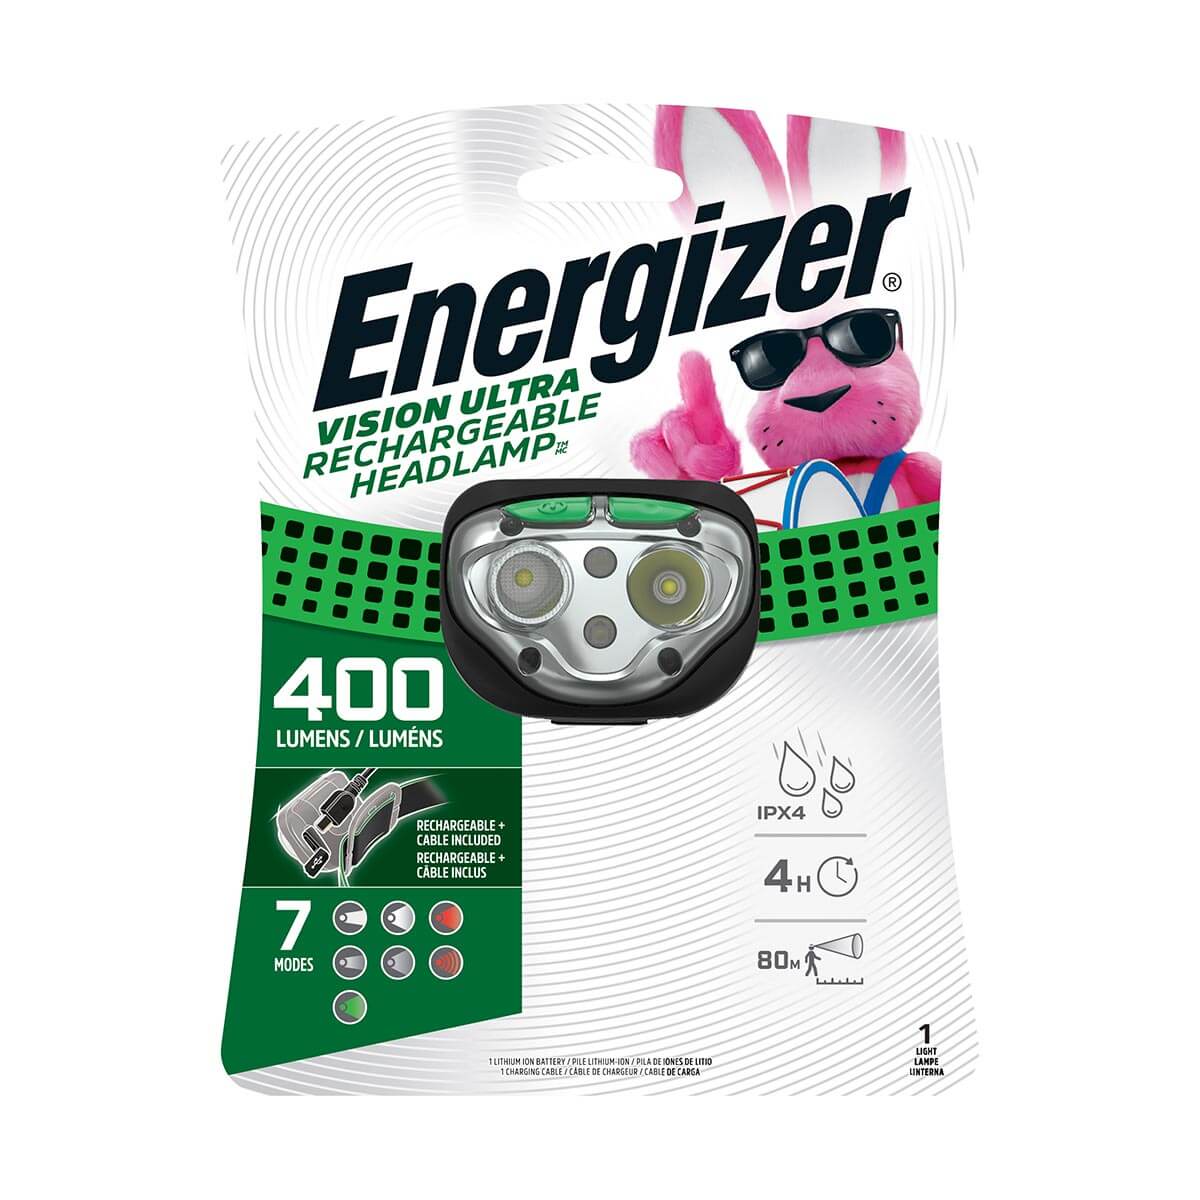 Energizer 400-Lumen Rechargeable Headlamp